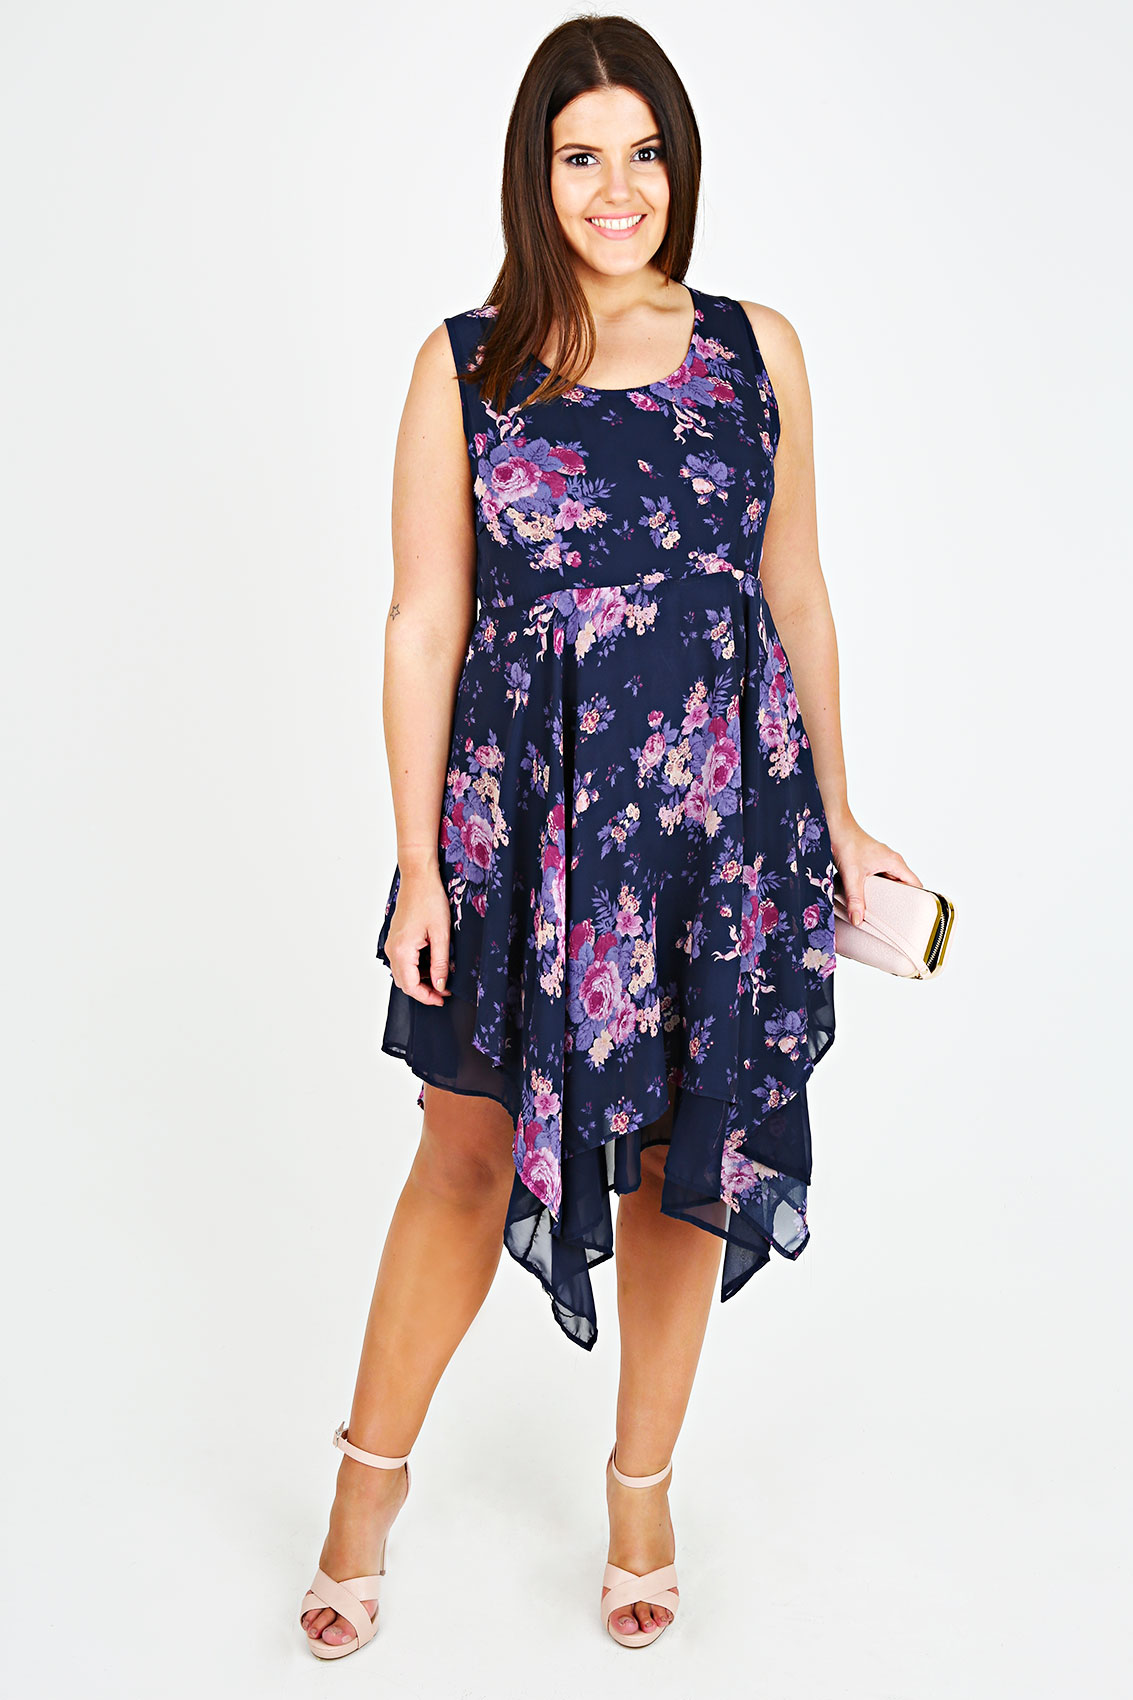 Navy & Purple Sleeveless Floral Print Hanky Hem Dress Plus Size 14 to 32